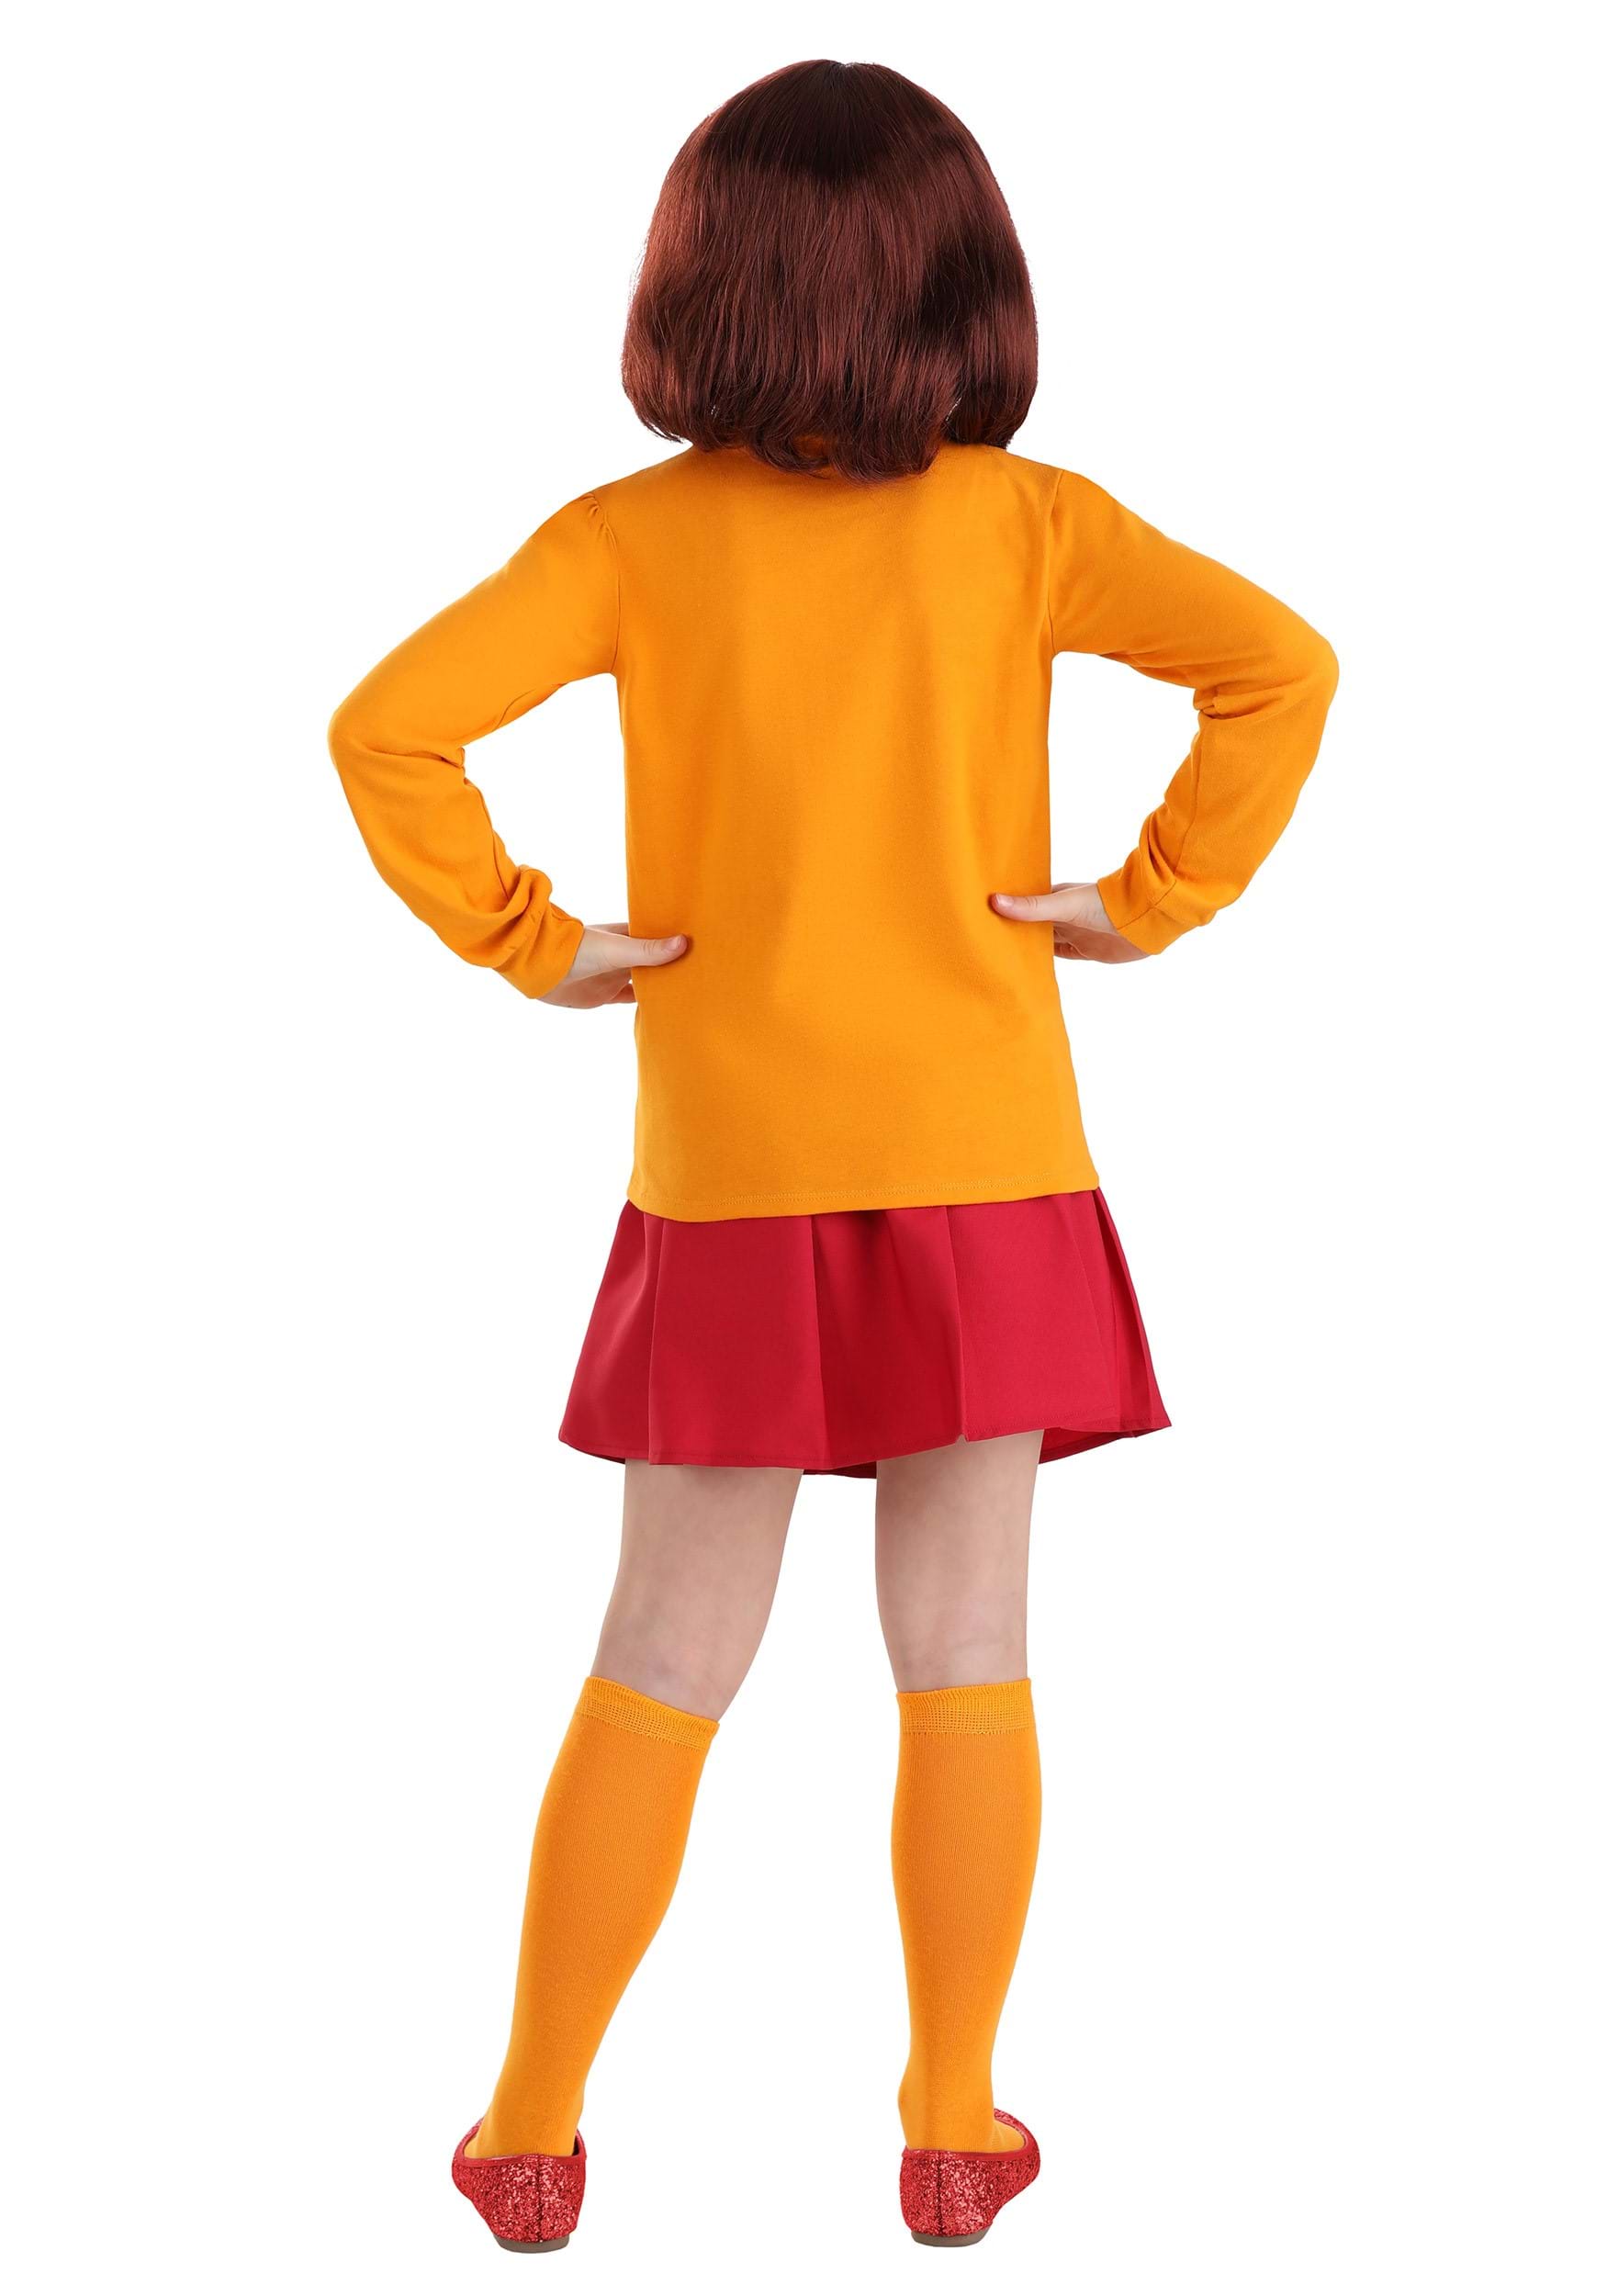 Women's Velma Scooby Doo Wig